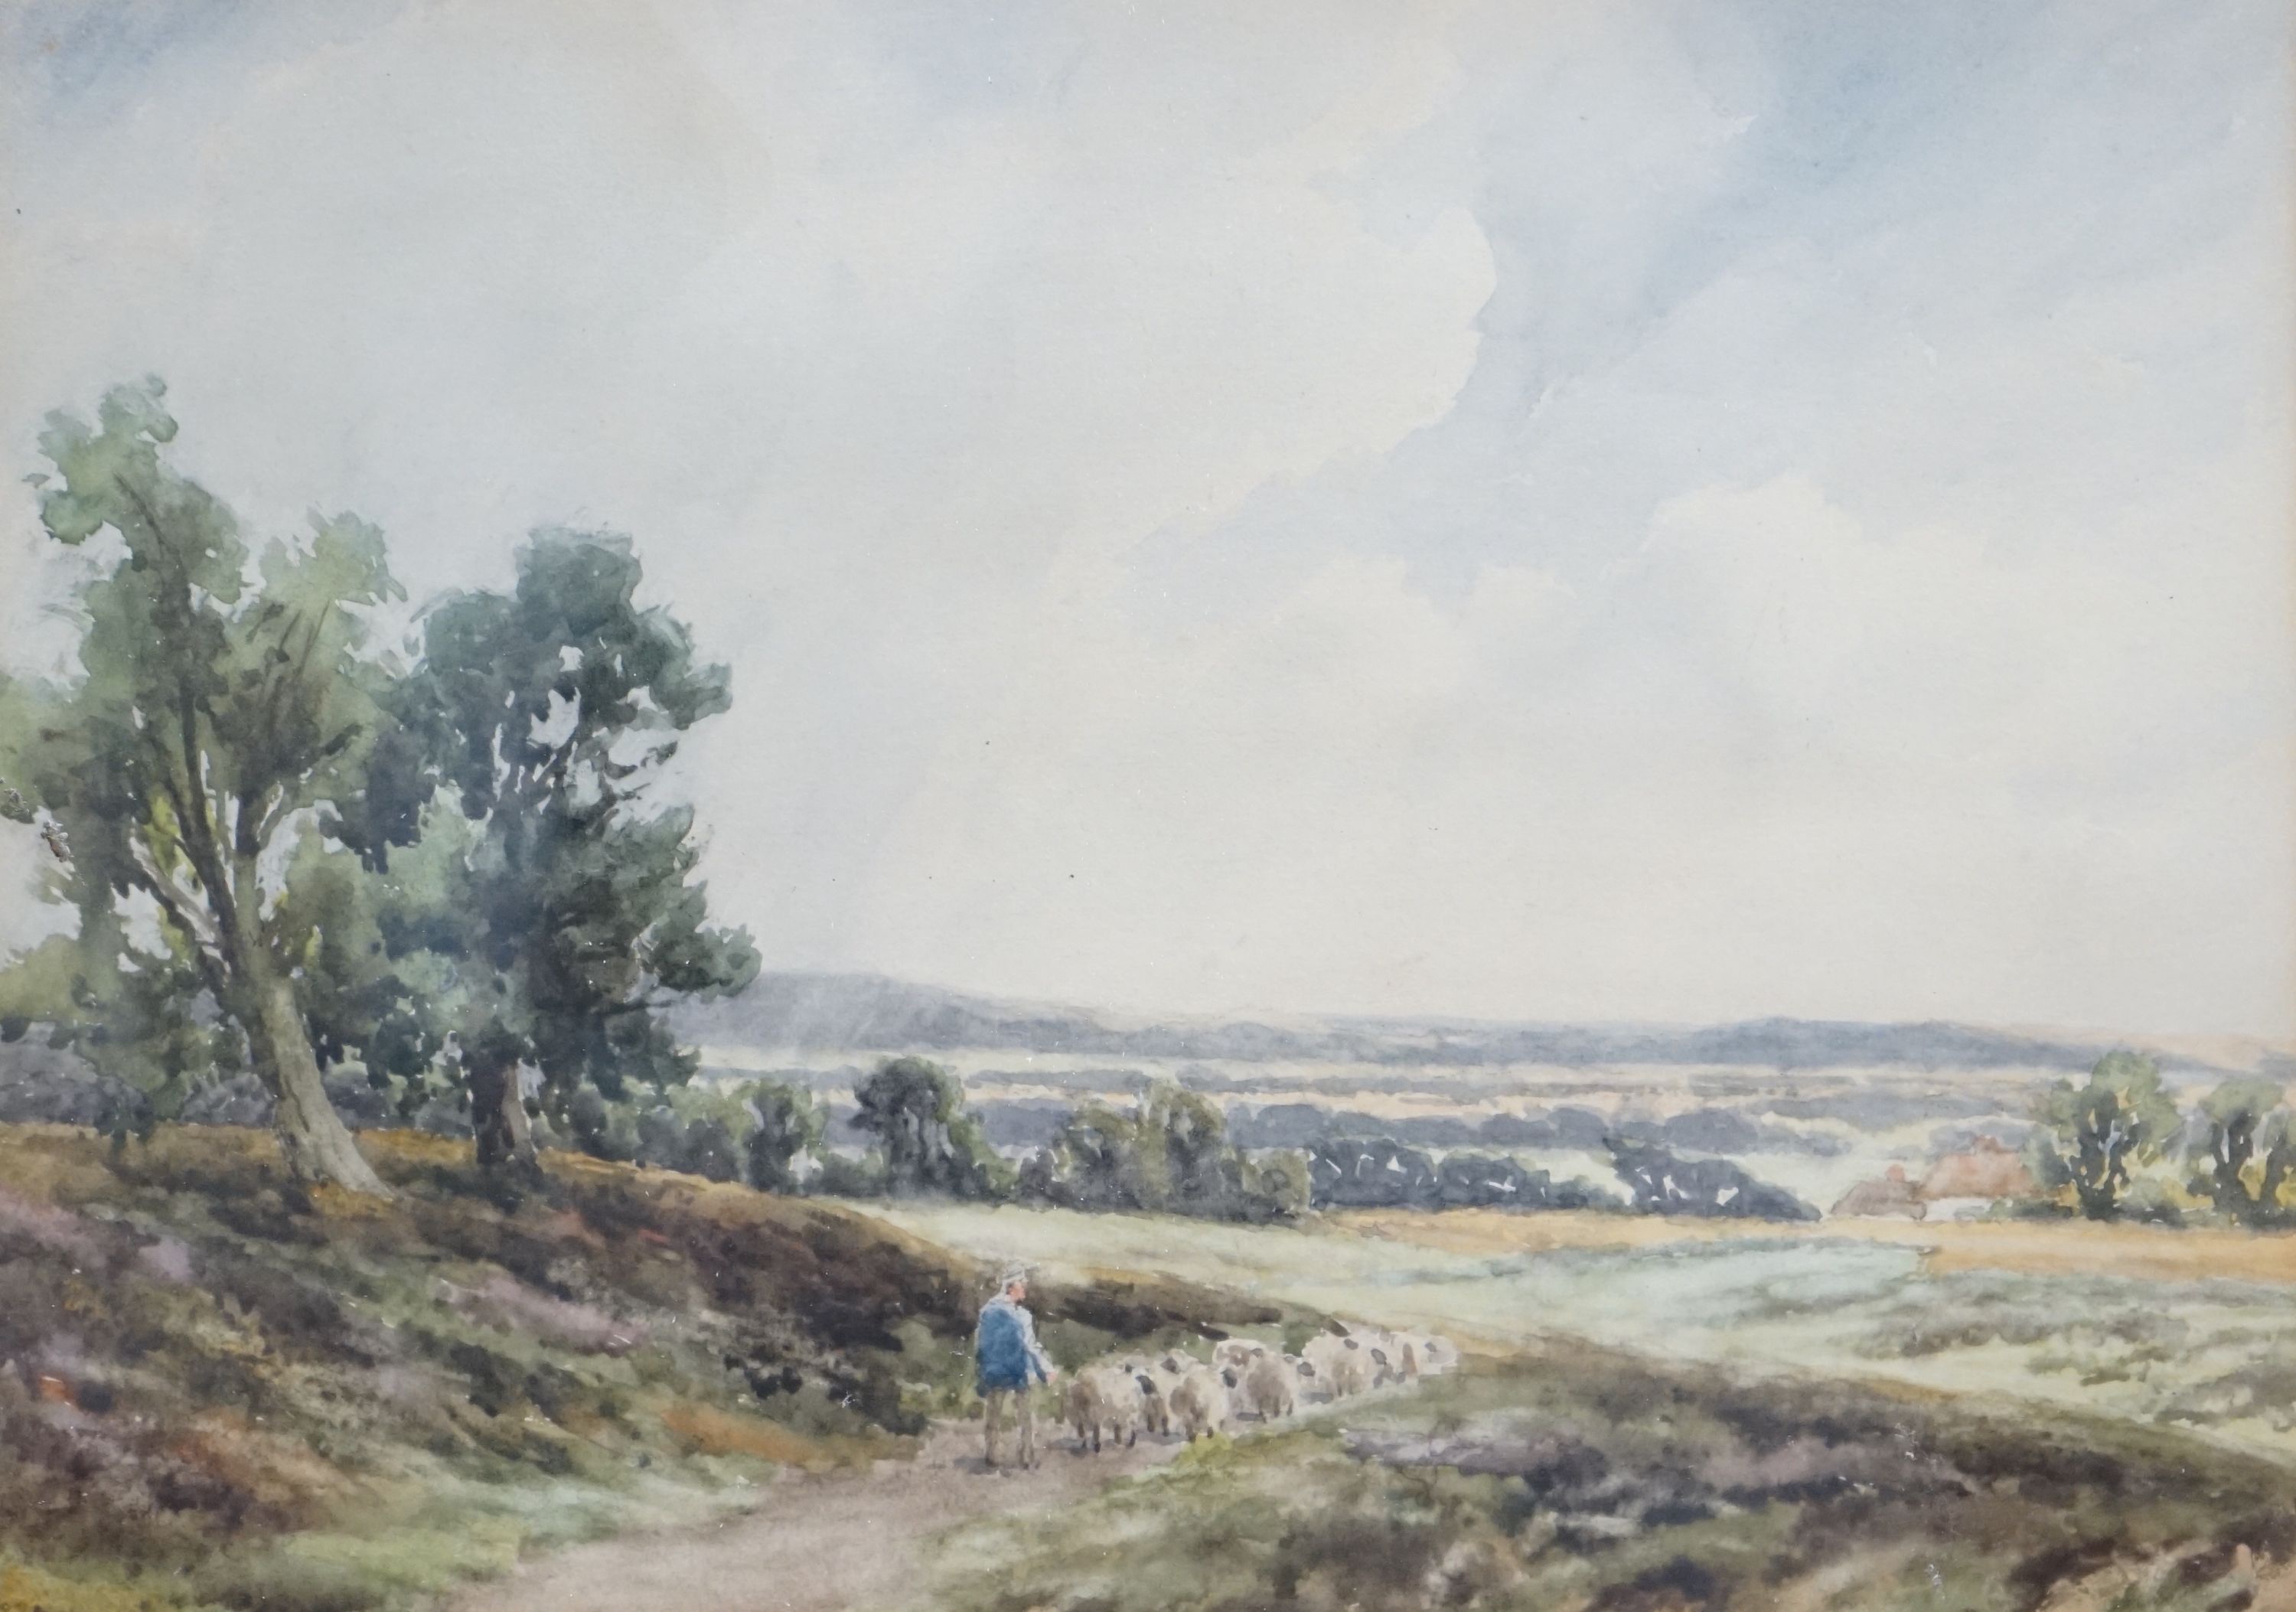 Richard William Halfnight (1855-1925), watercolour, 'A scene in Sussex', artist label verso, 26 x 36cm